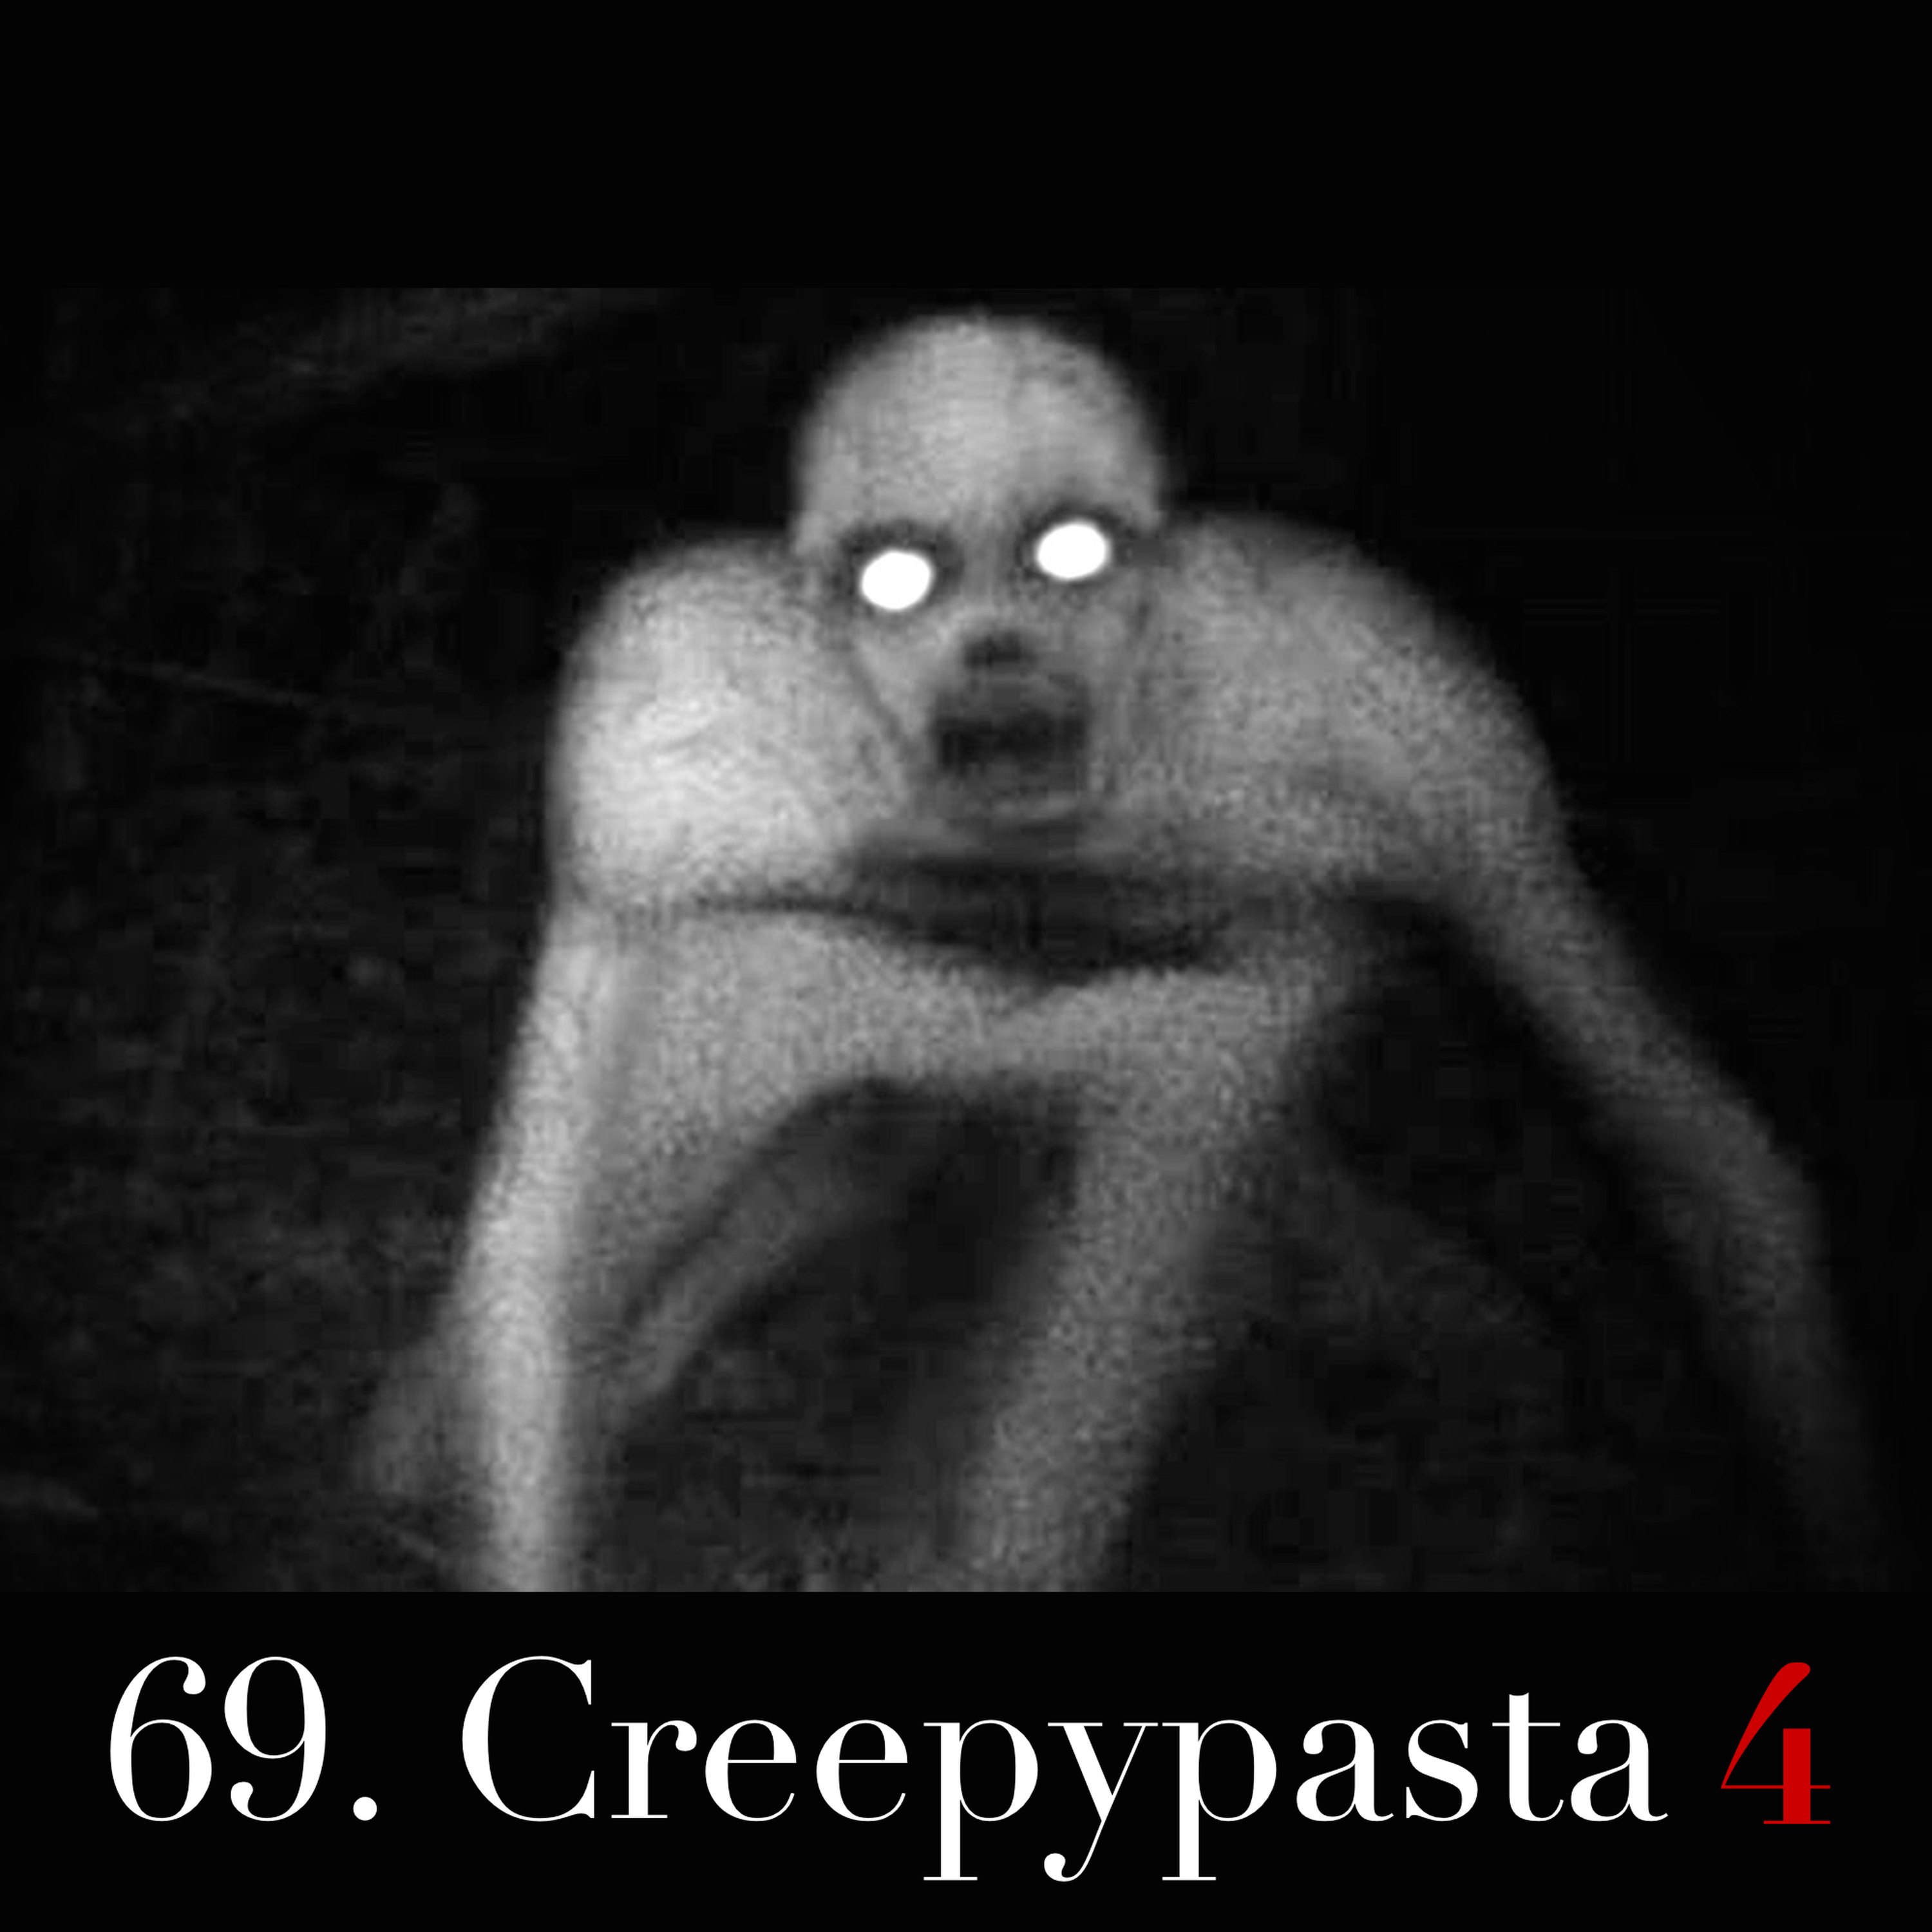 69. Creepypasta 4